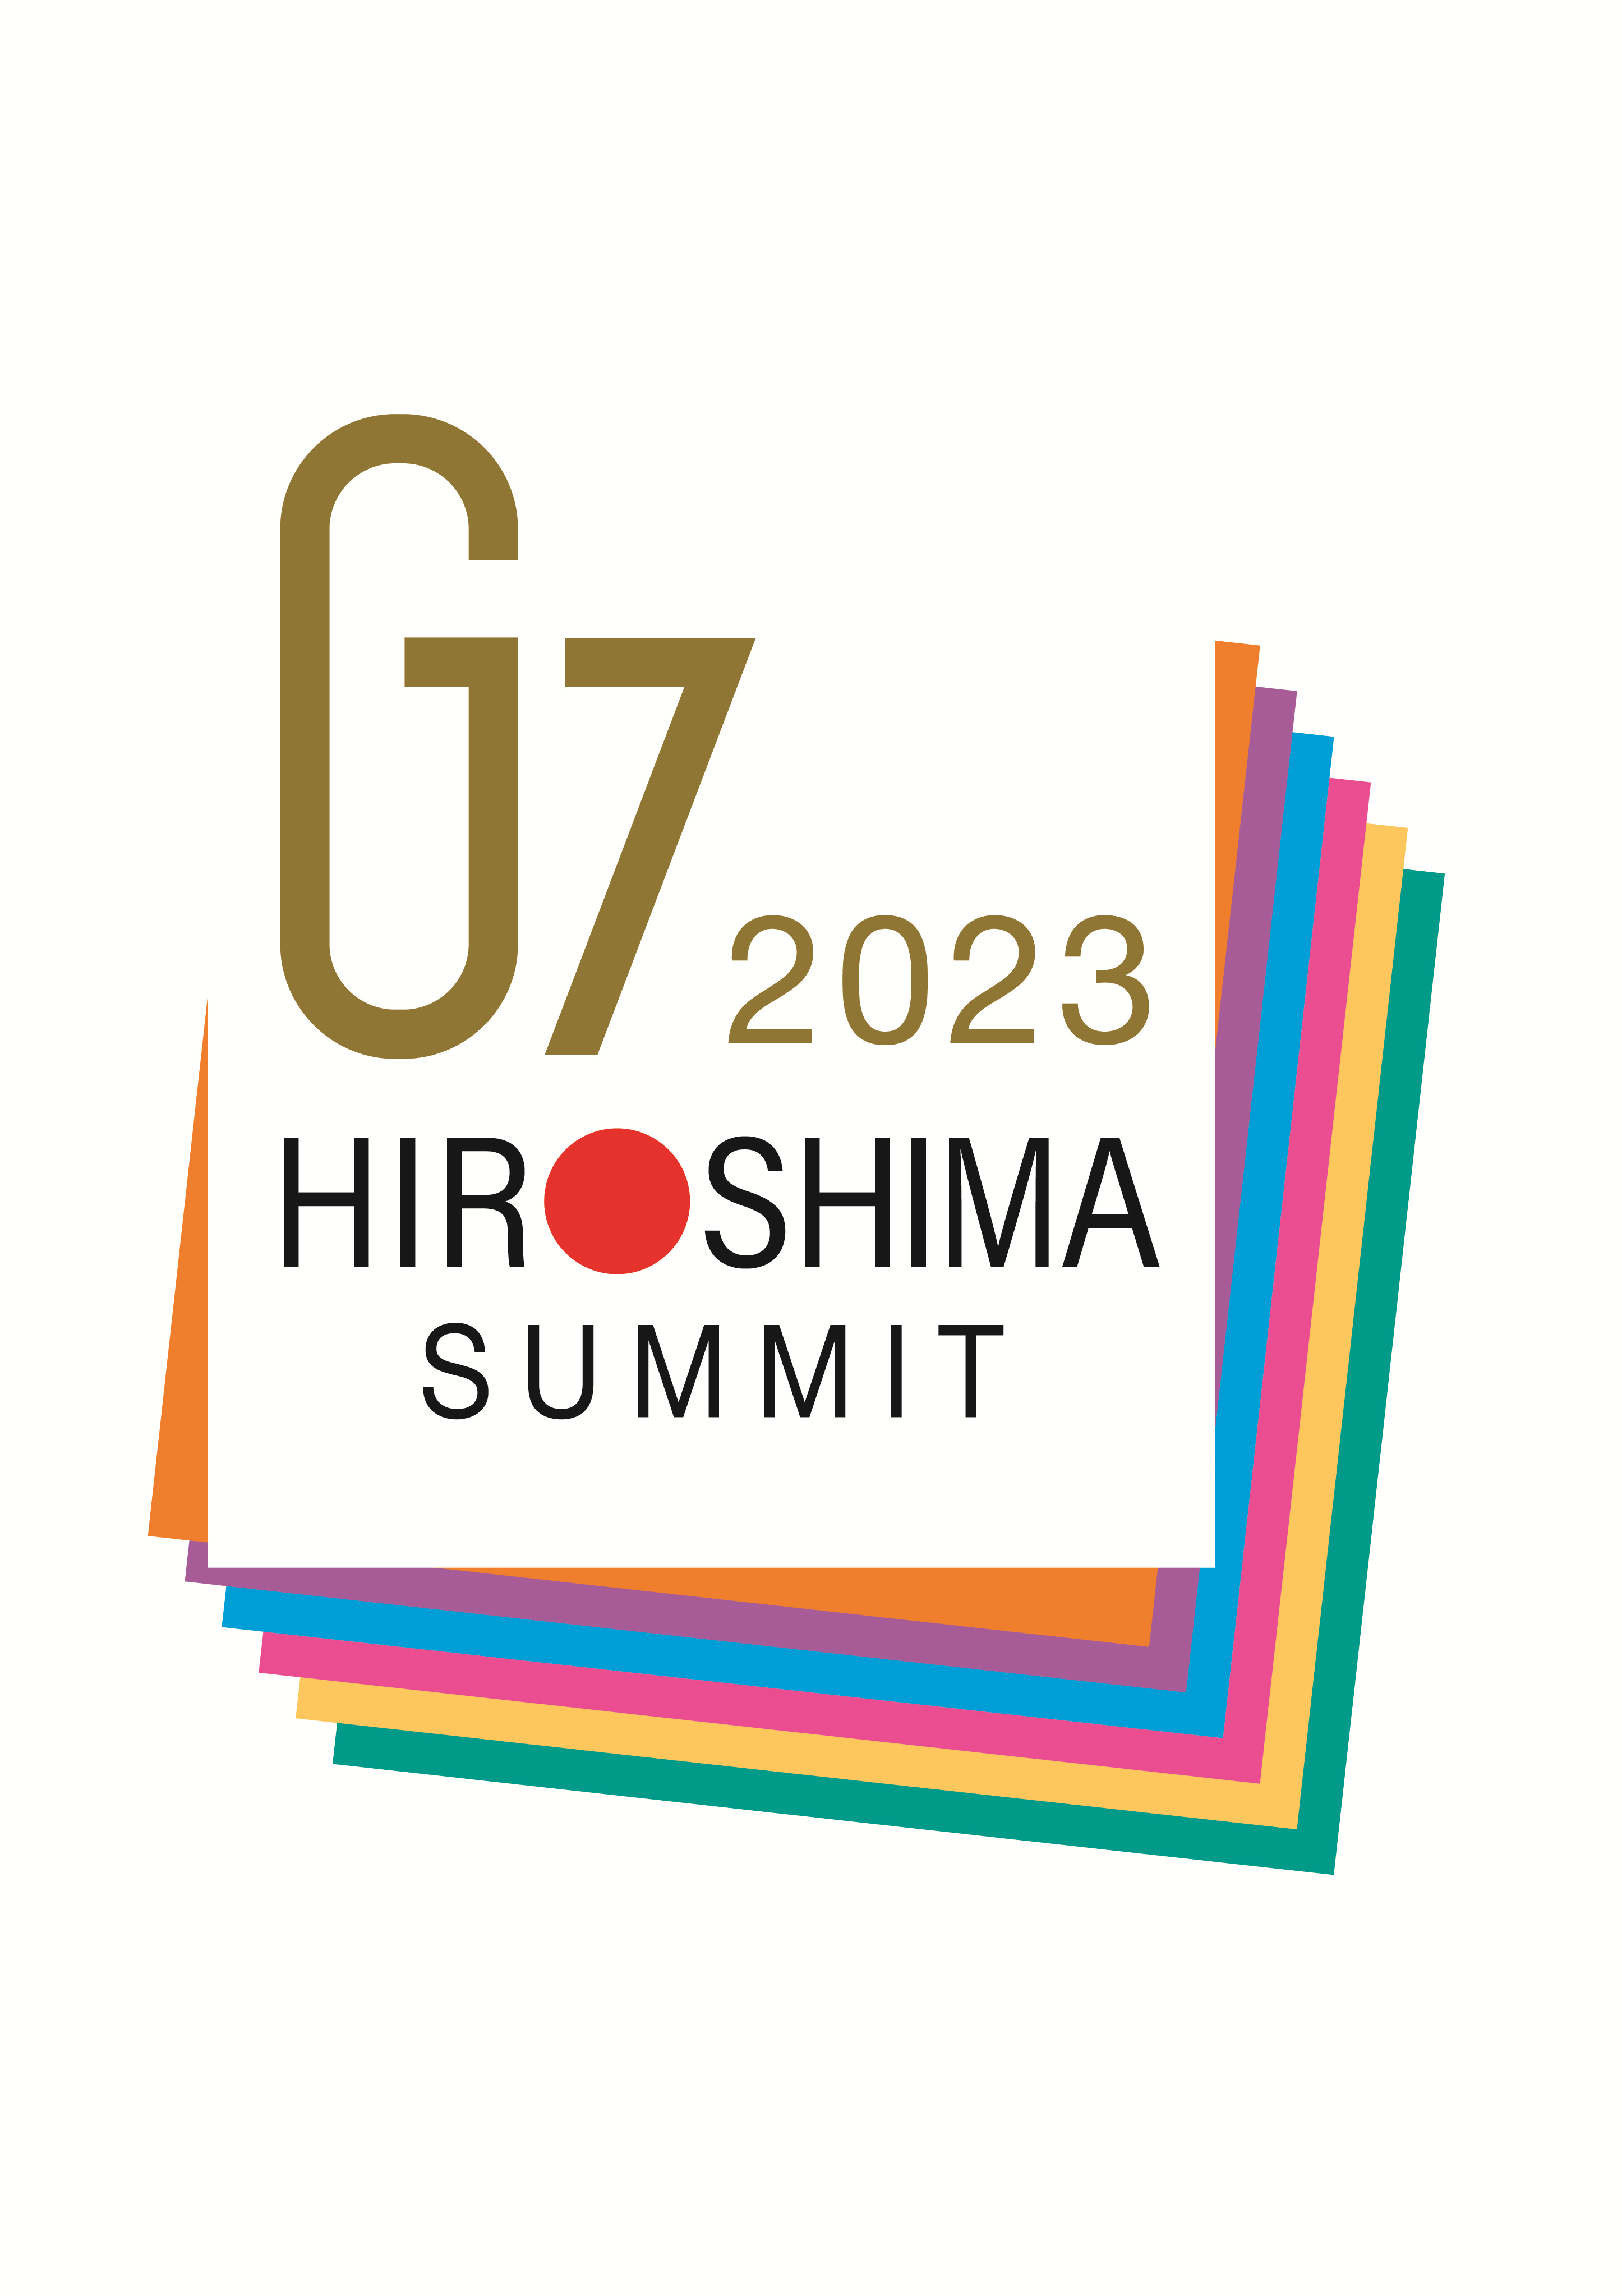 2023 G7 Hiroshima